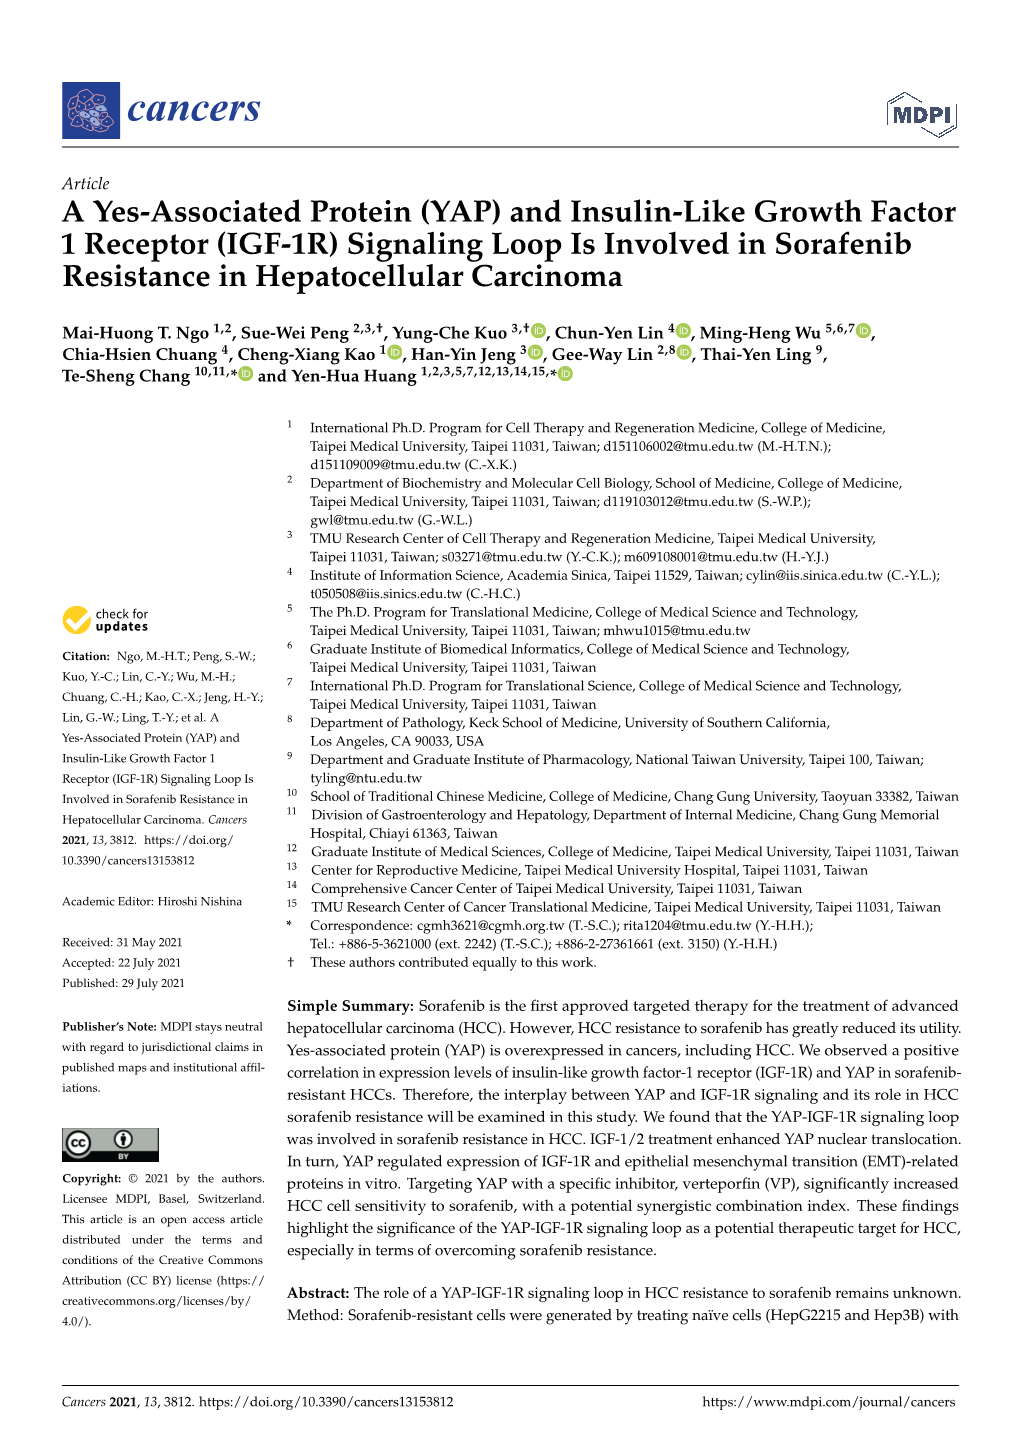 IGF-1R) Signaling Loop Is Involved in Sorafenib Resistance in Hepatocellular Carcinoma